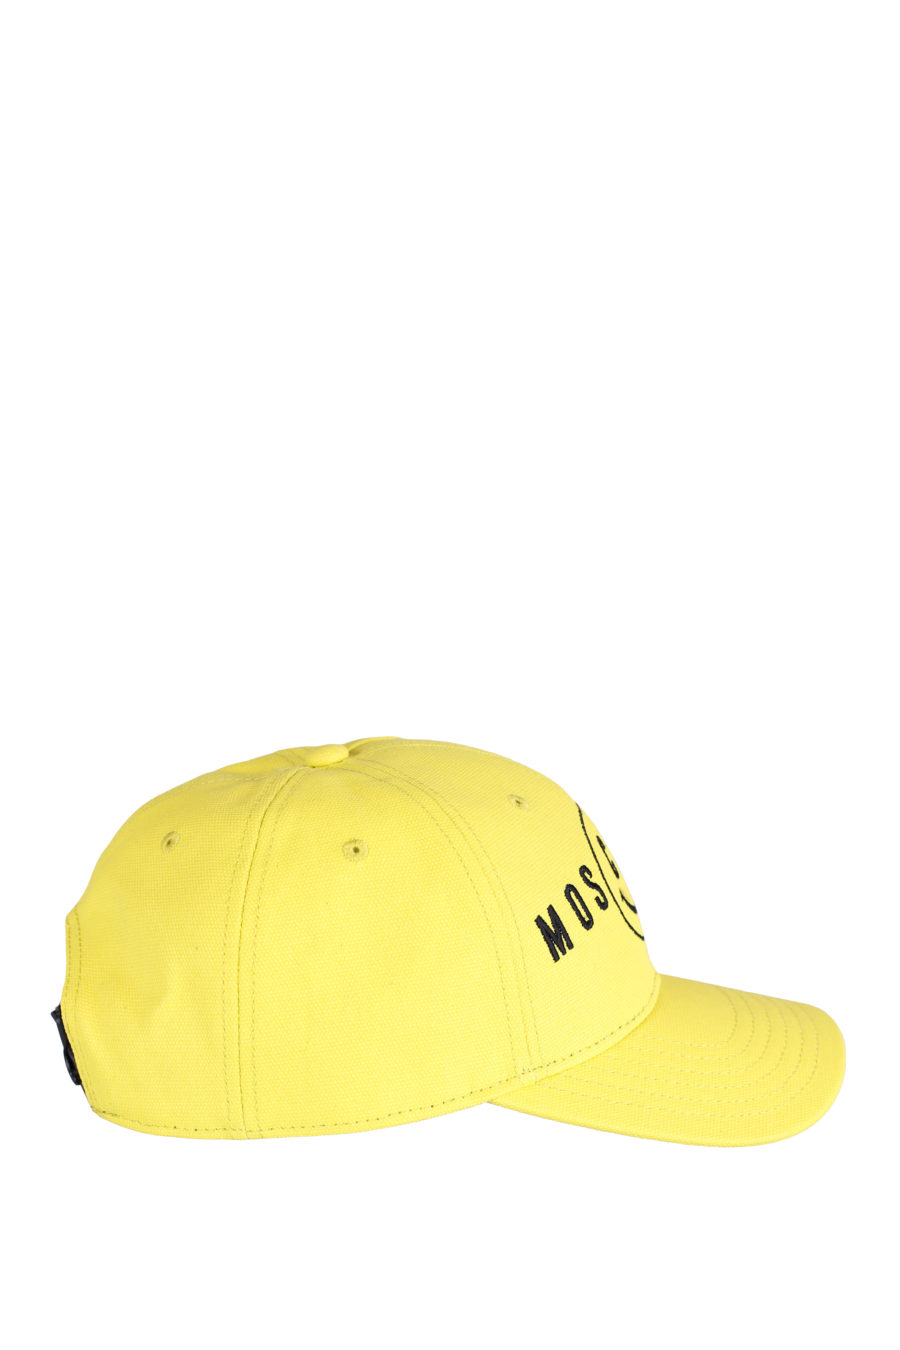 Gorra amarilla logo "Smiley" - IMG 0814